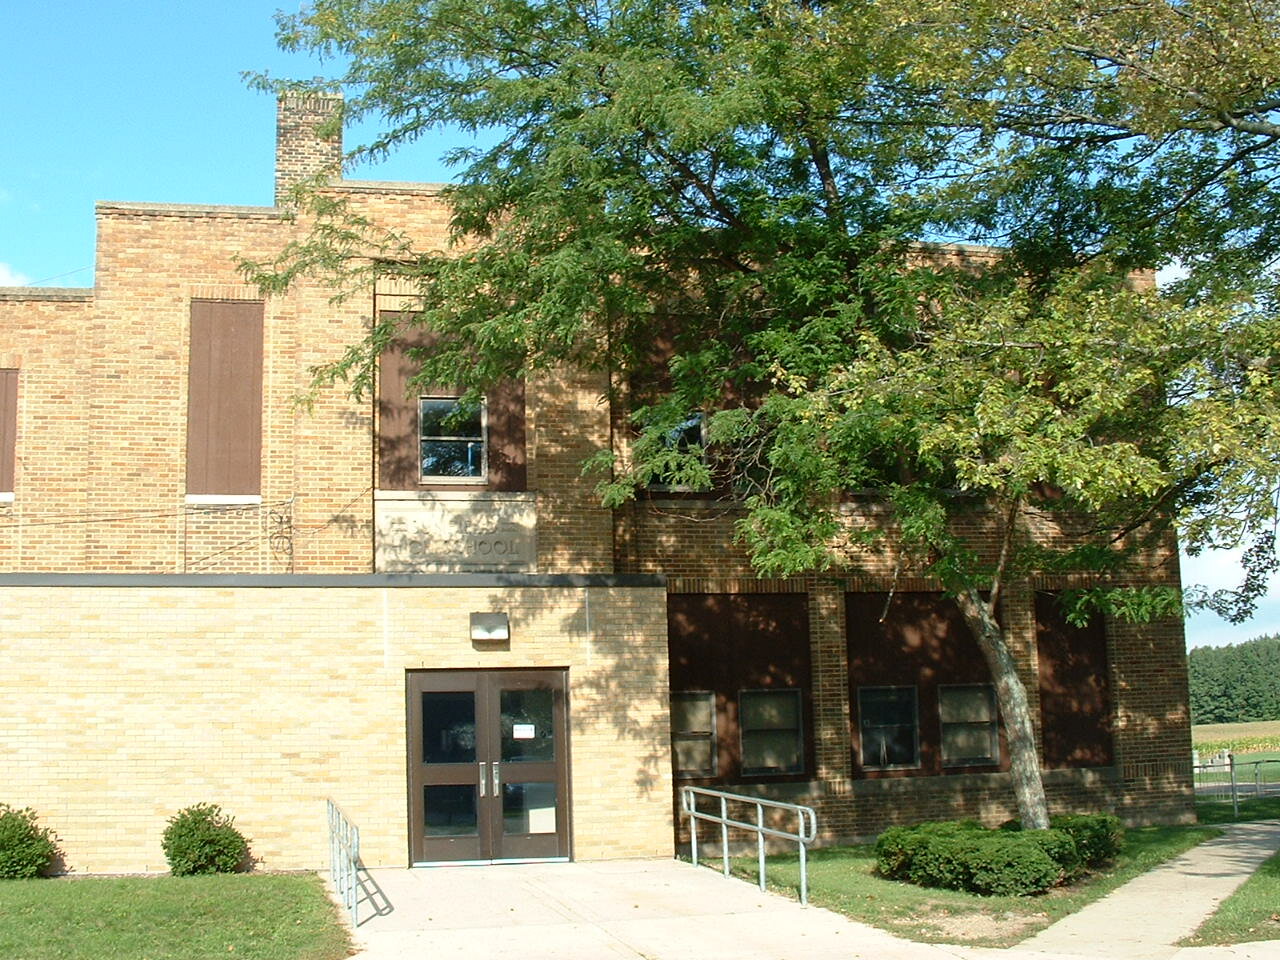 Sunfield Elementary